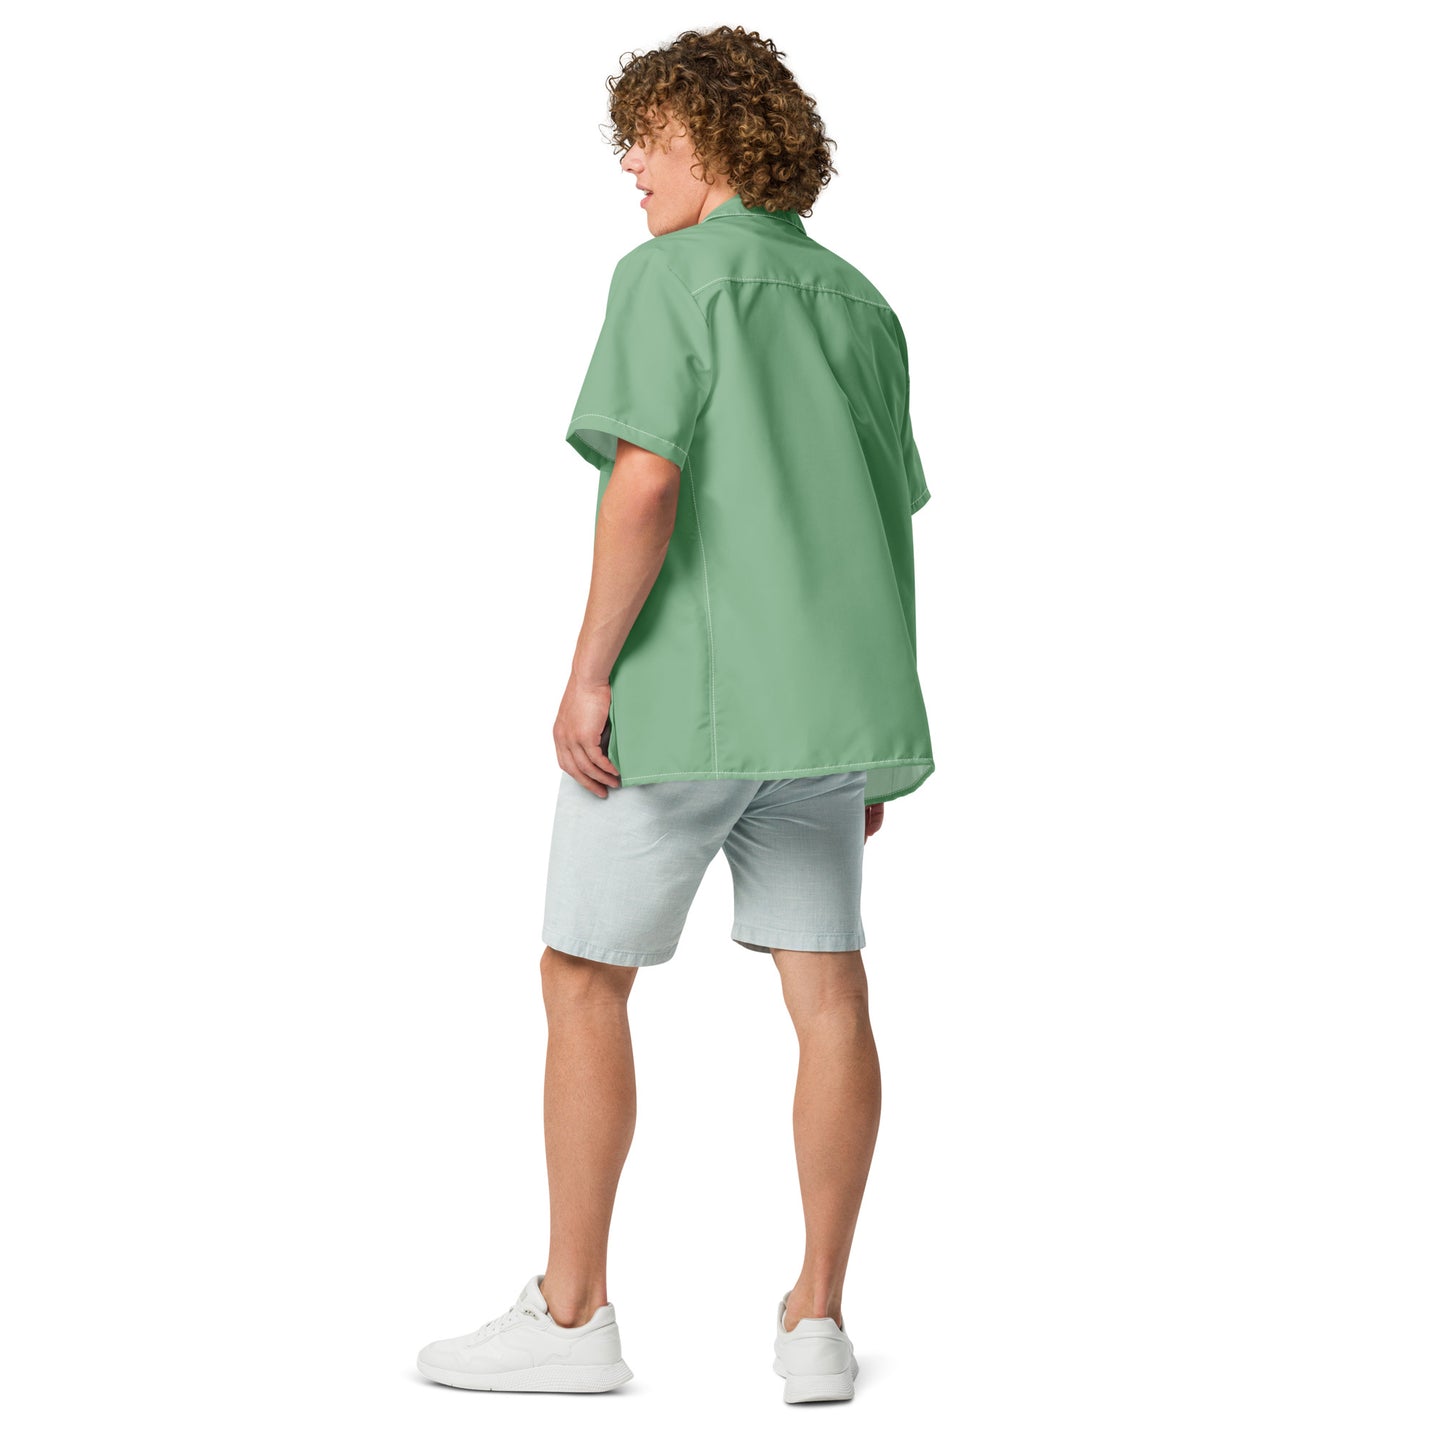 Palm Green button shirt - Tropical Seas Clothing 